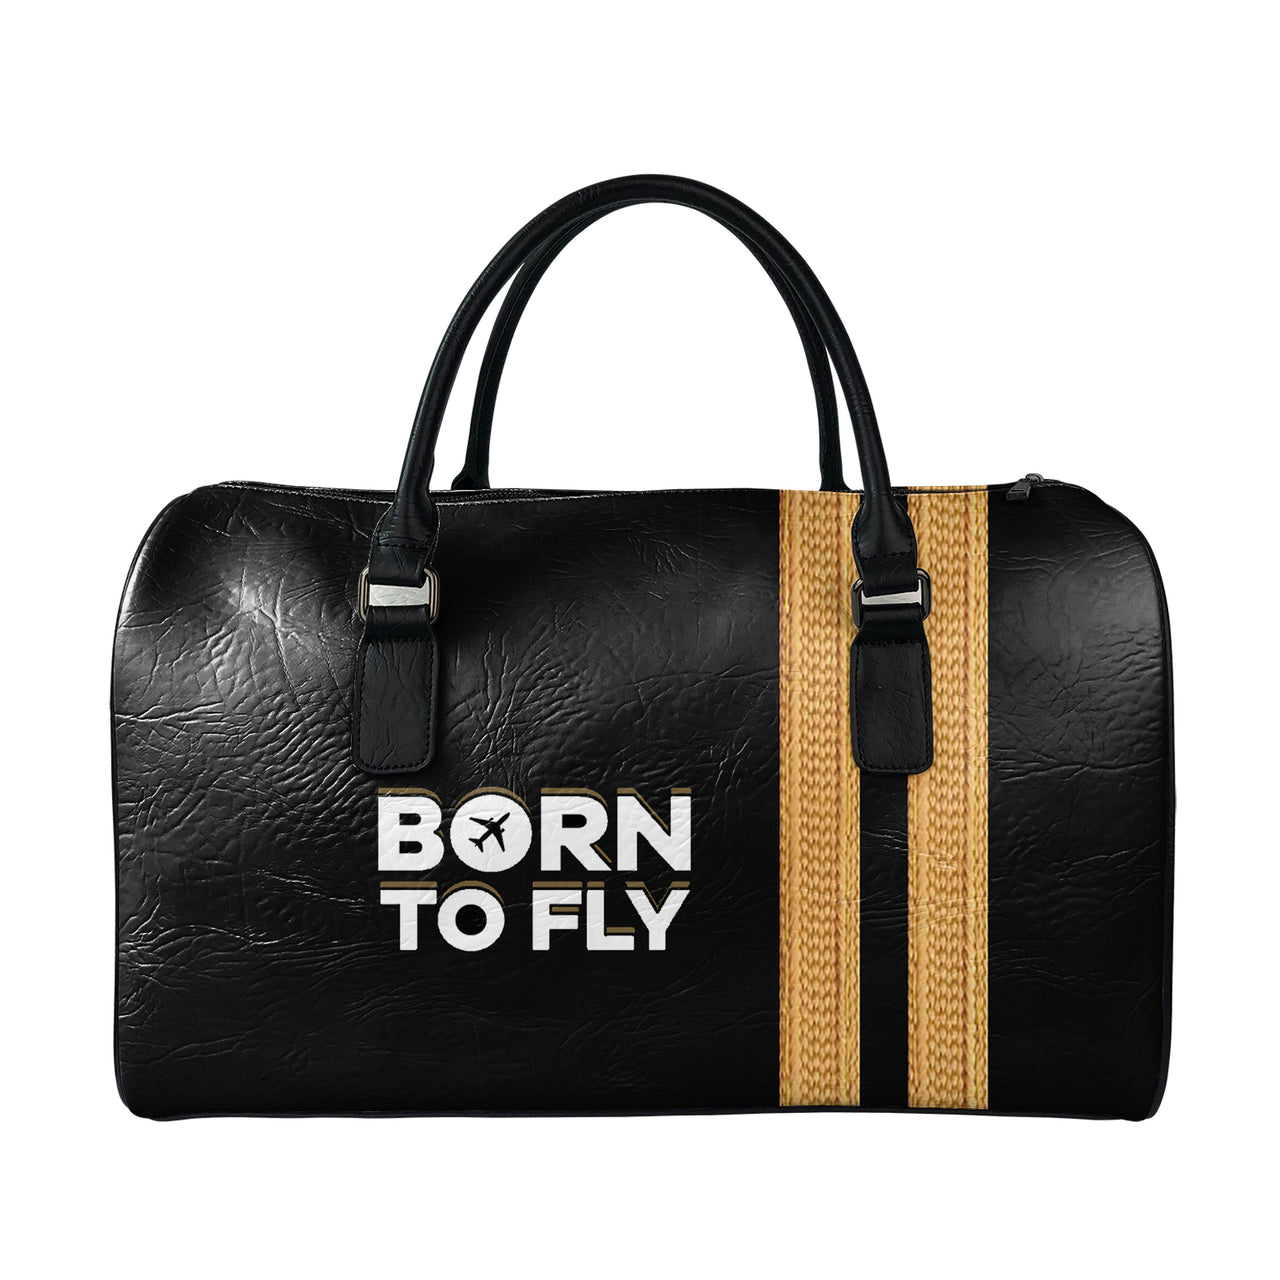 Born To Fly & Pilot Epaulettes (4,3,2 Lines) Designed Leather Travel Bag